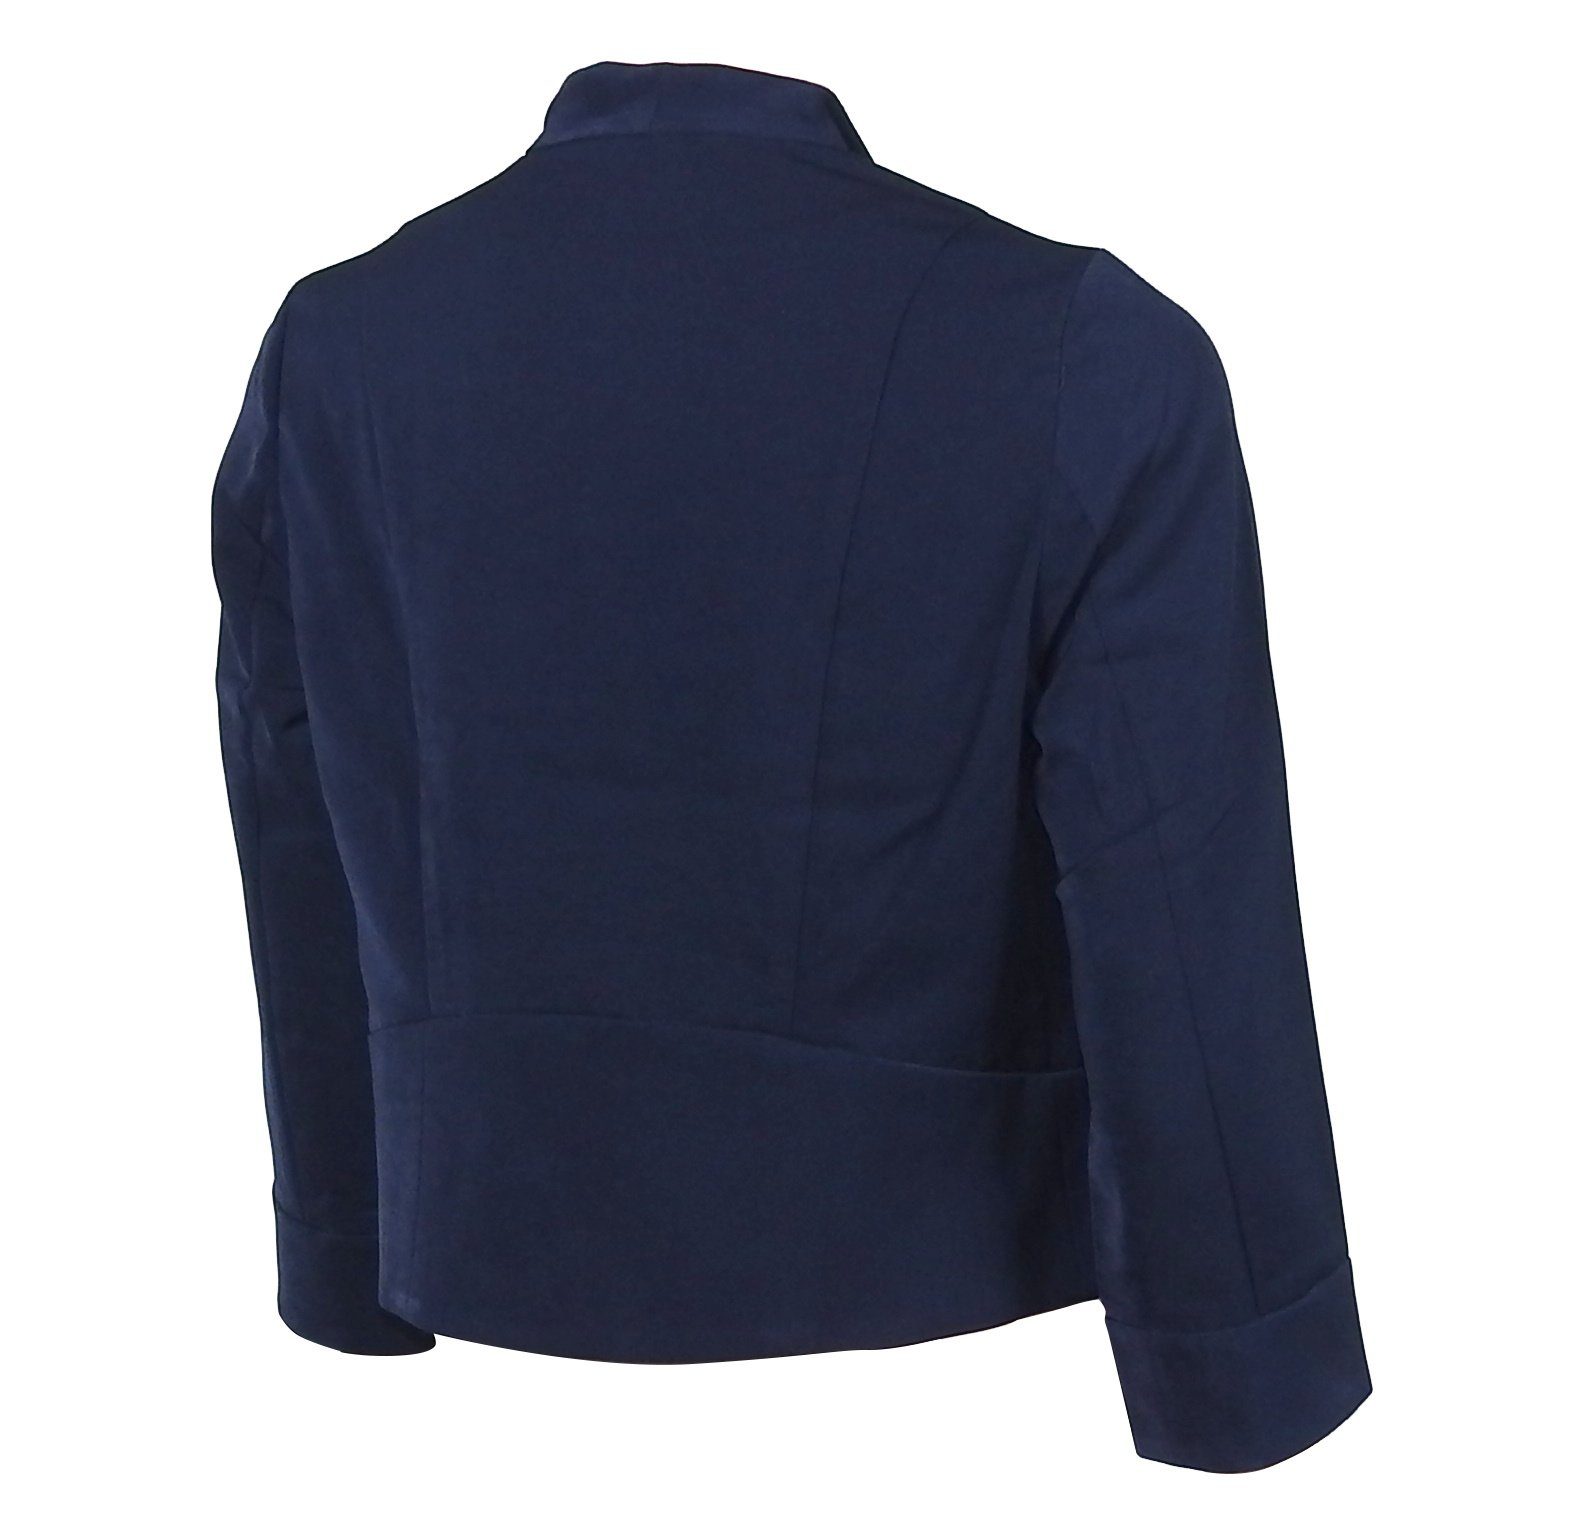 Sakko im Basic Look Jackett Kurzjacke mit Zipper Jacke Malito Damen Blazer ohne Kragen Blouson 6040